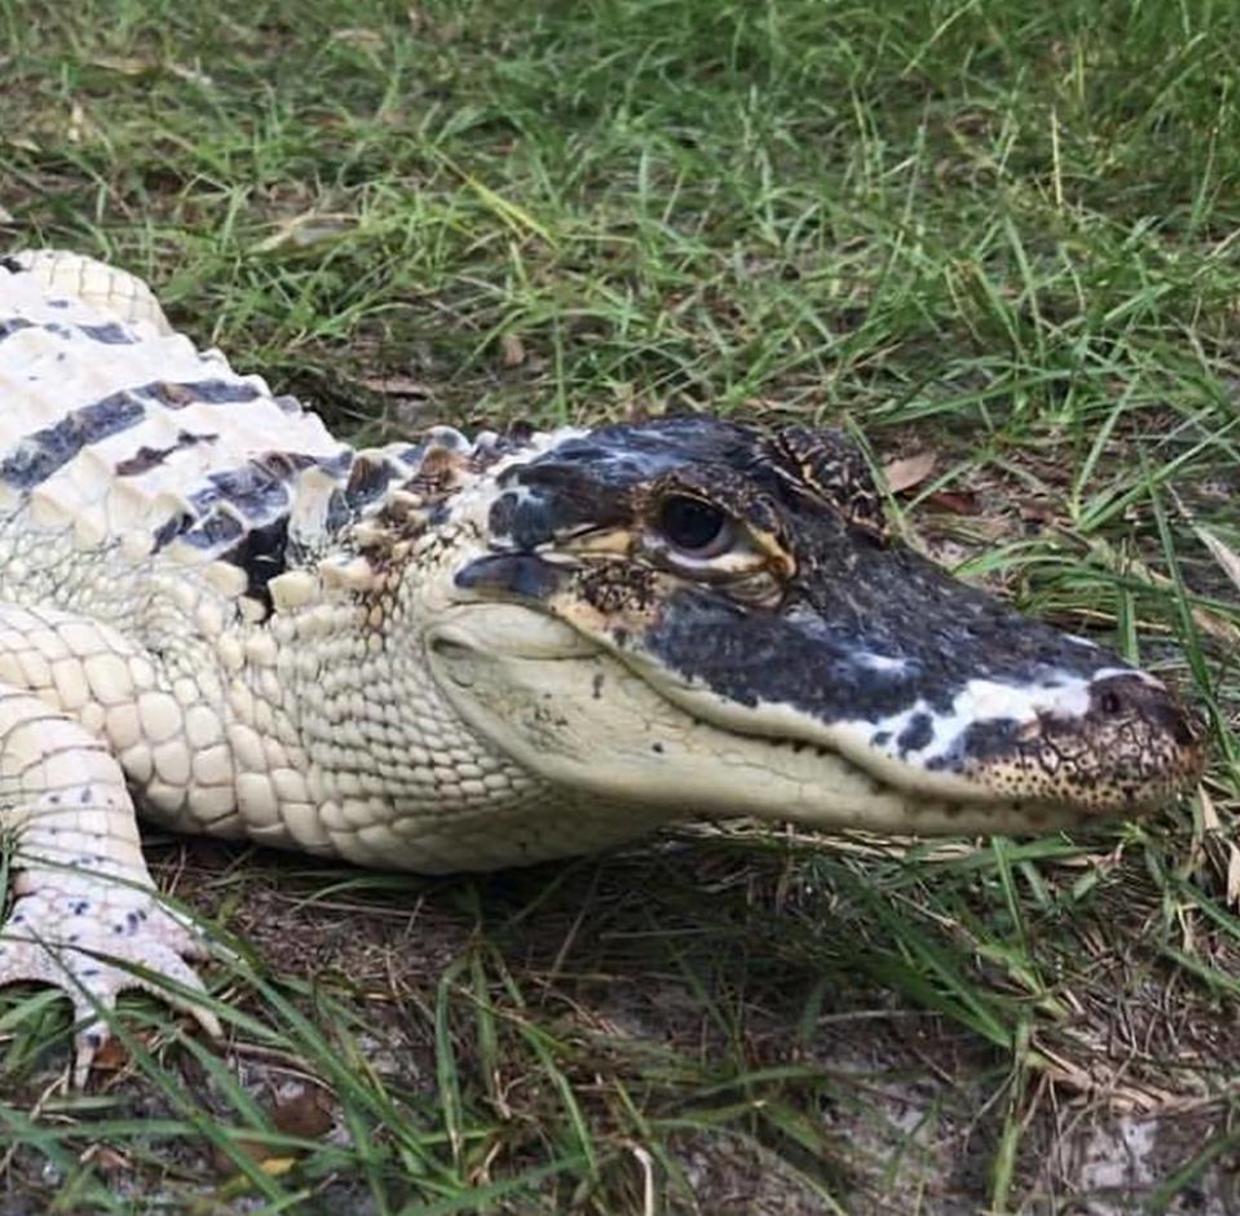 Rare White Alligator Stolen 43 Gators Killed In Burglary And Arson At